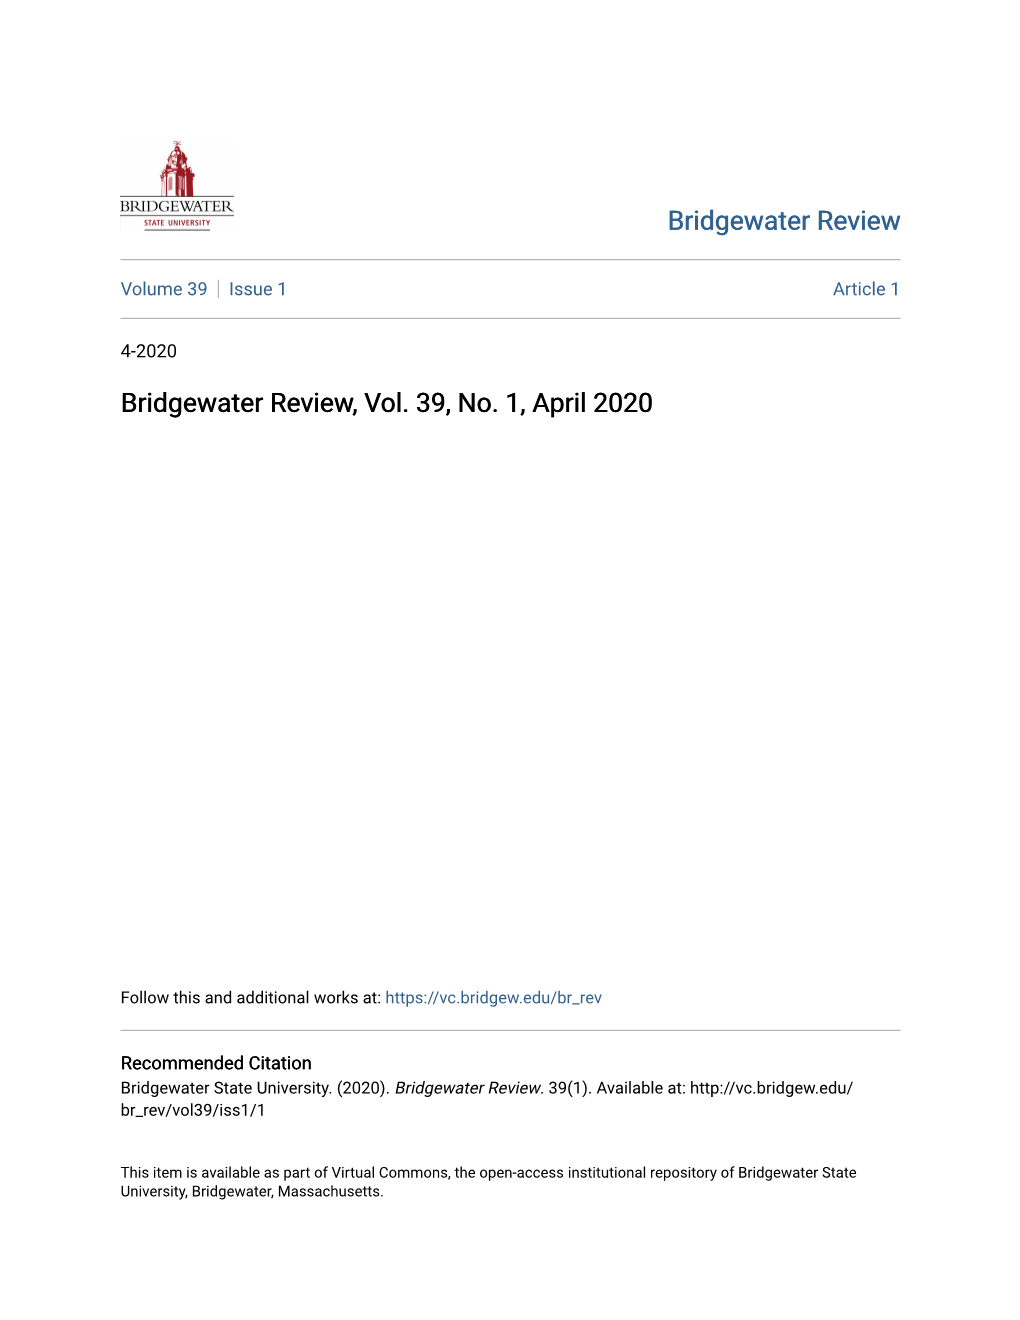 Bridgewater Review, Vol. 39, No. 1, April 2020